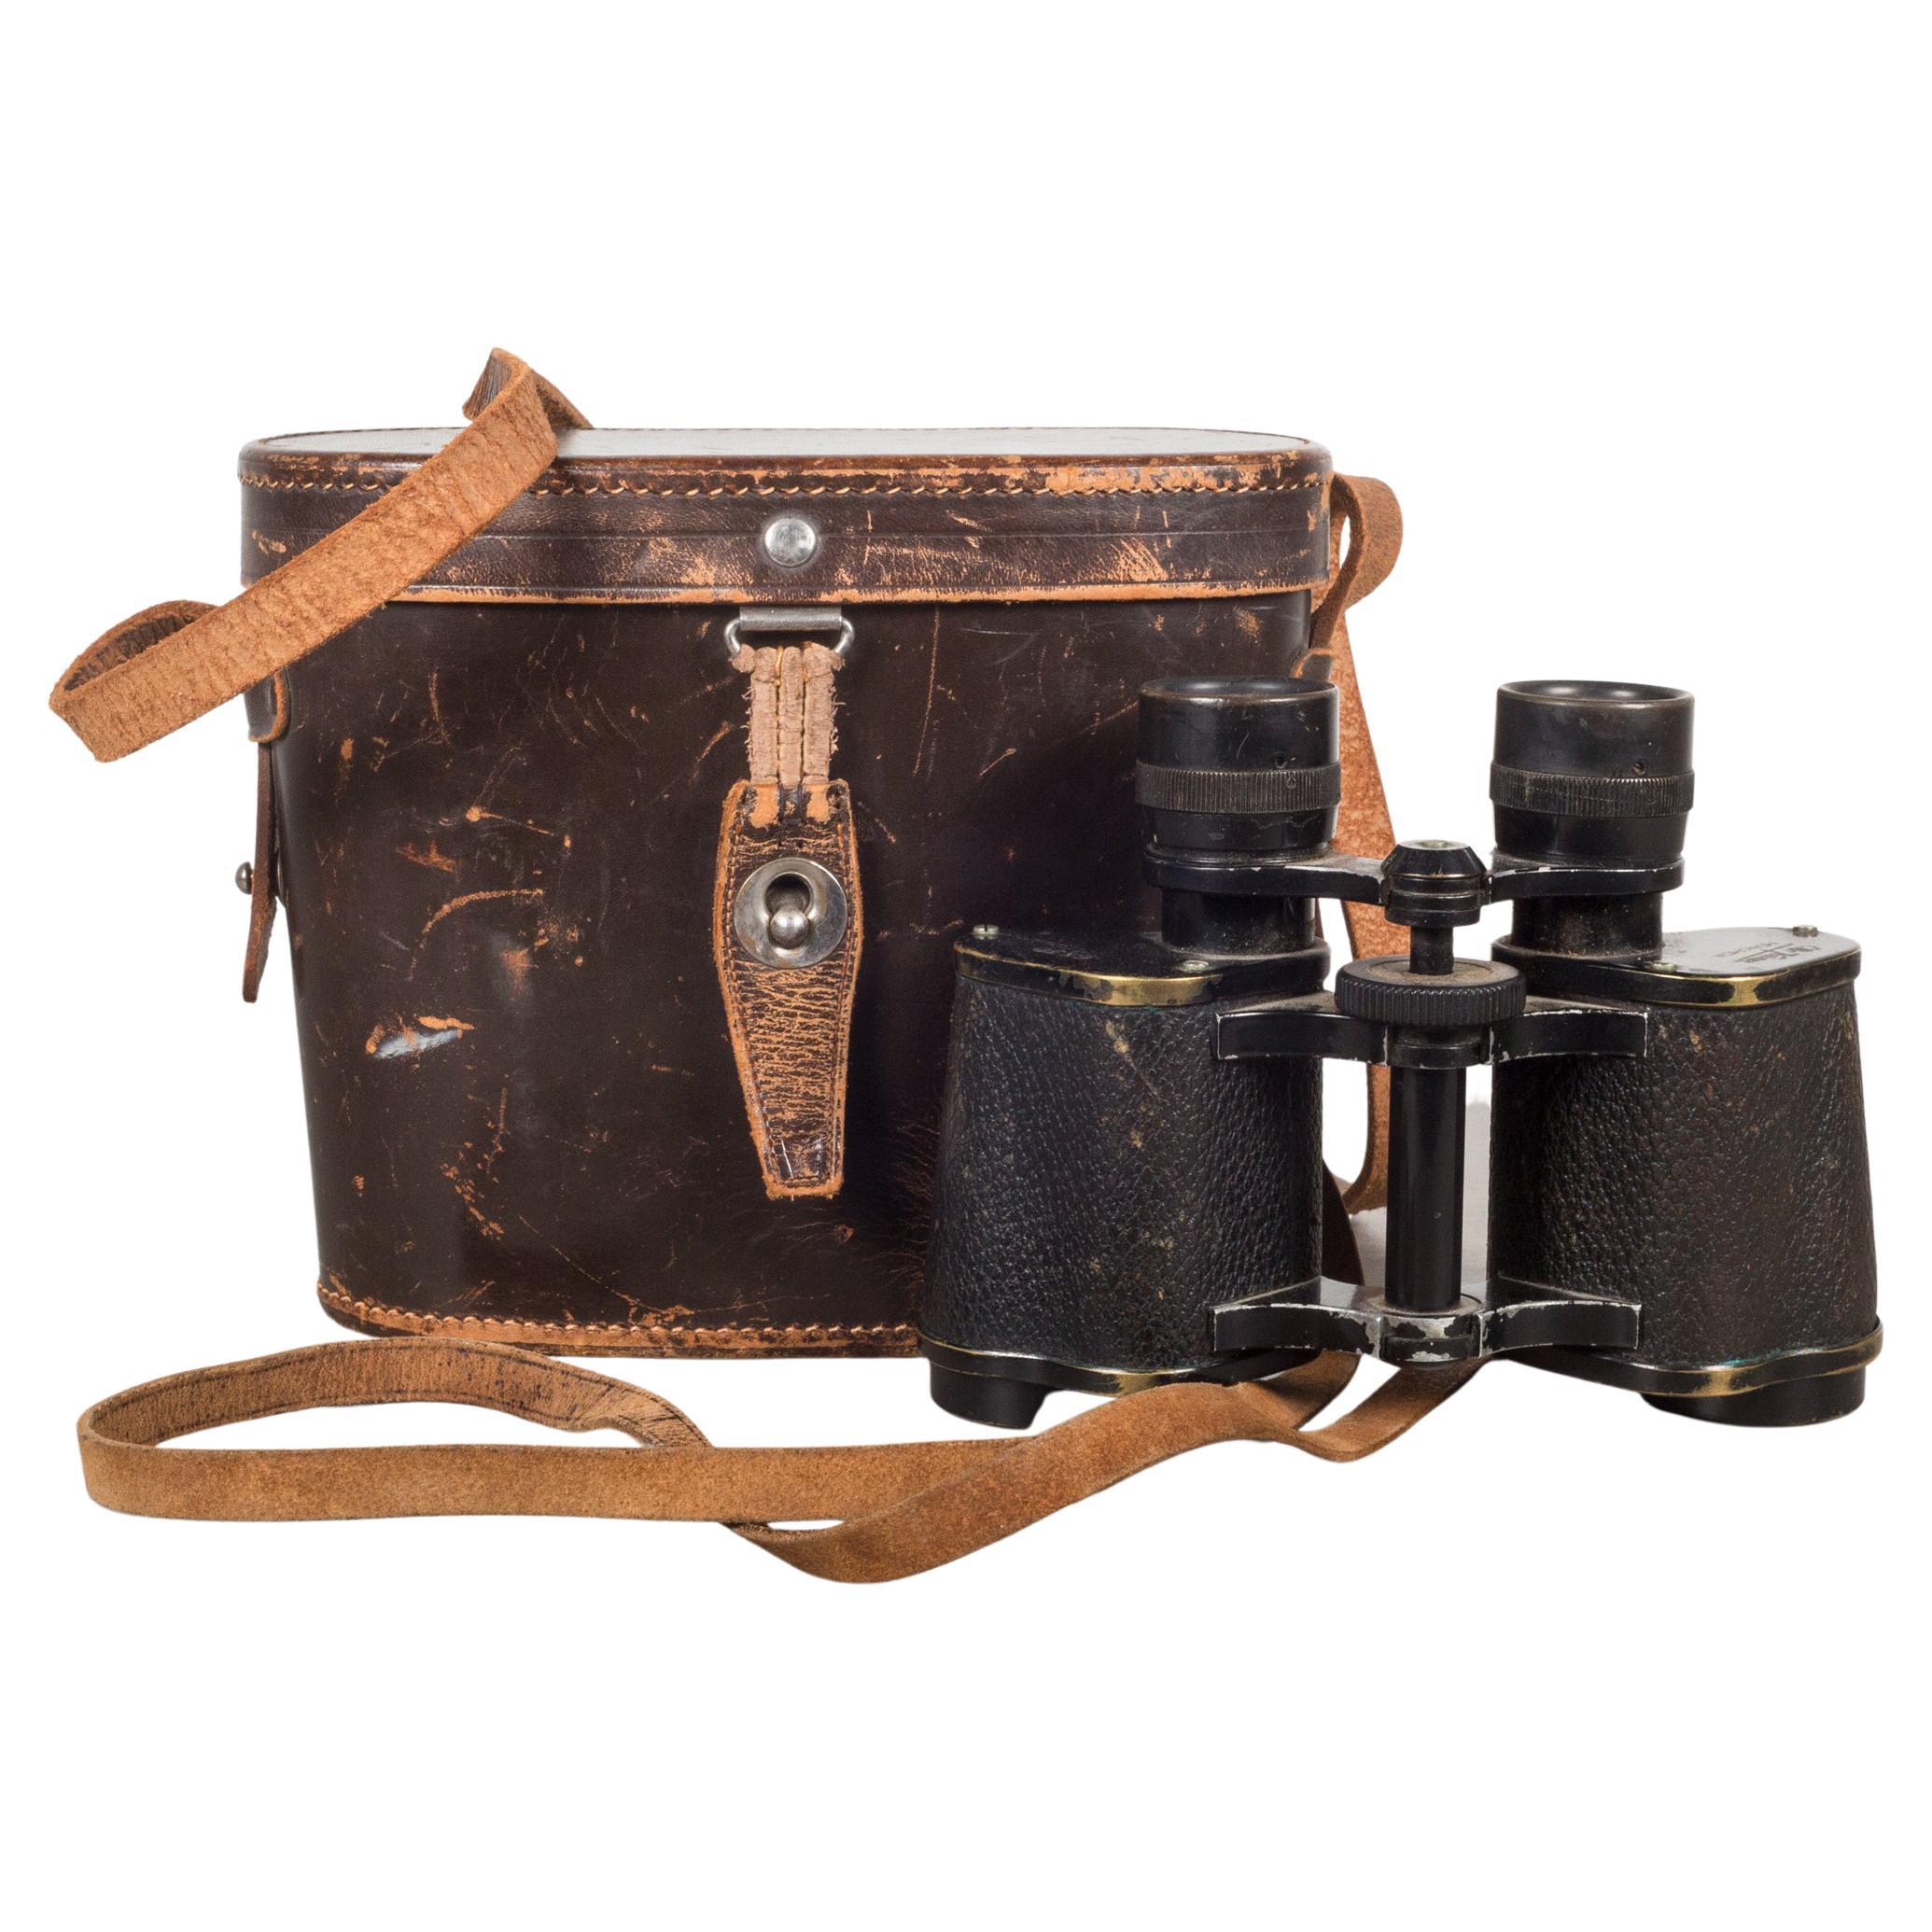 WWll German Military Binoculars and Leather Case, c.1940